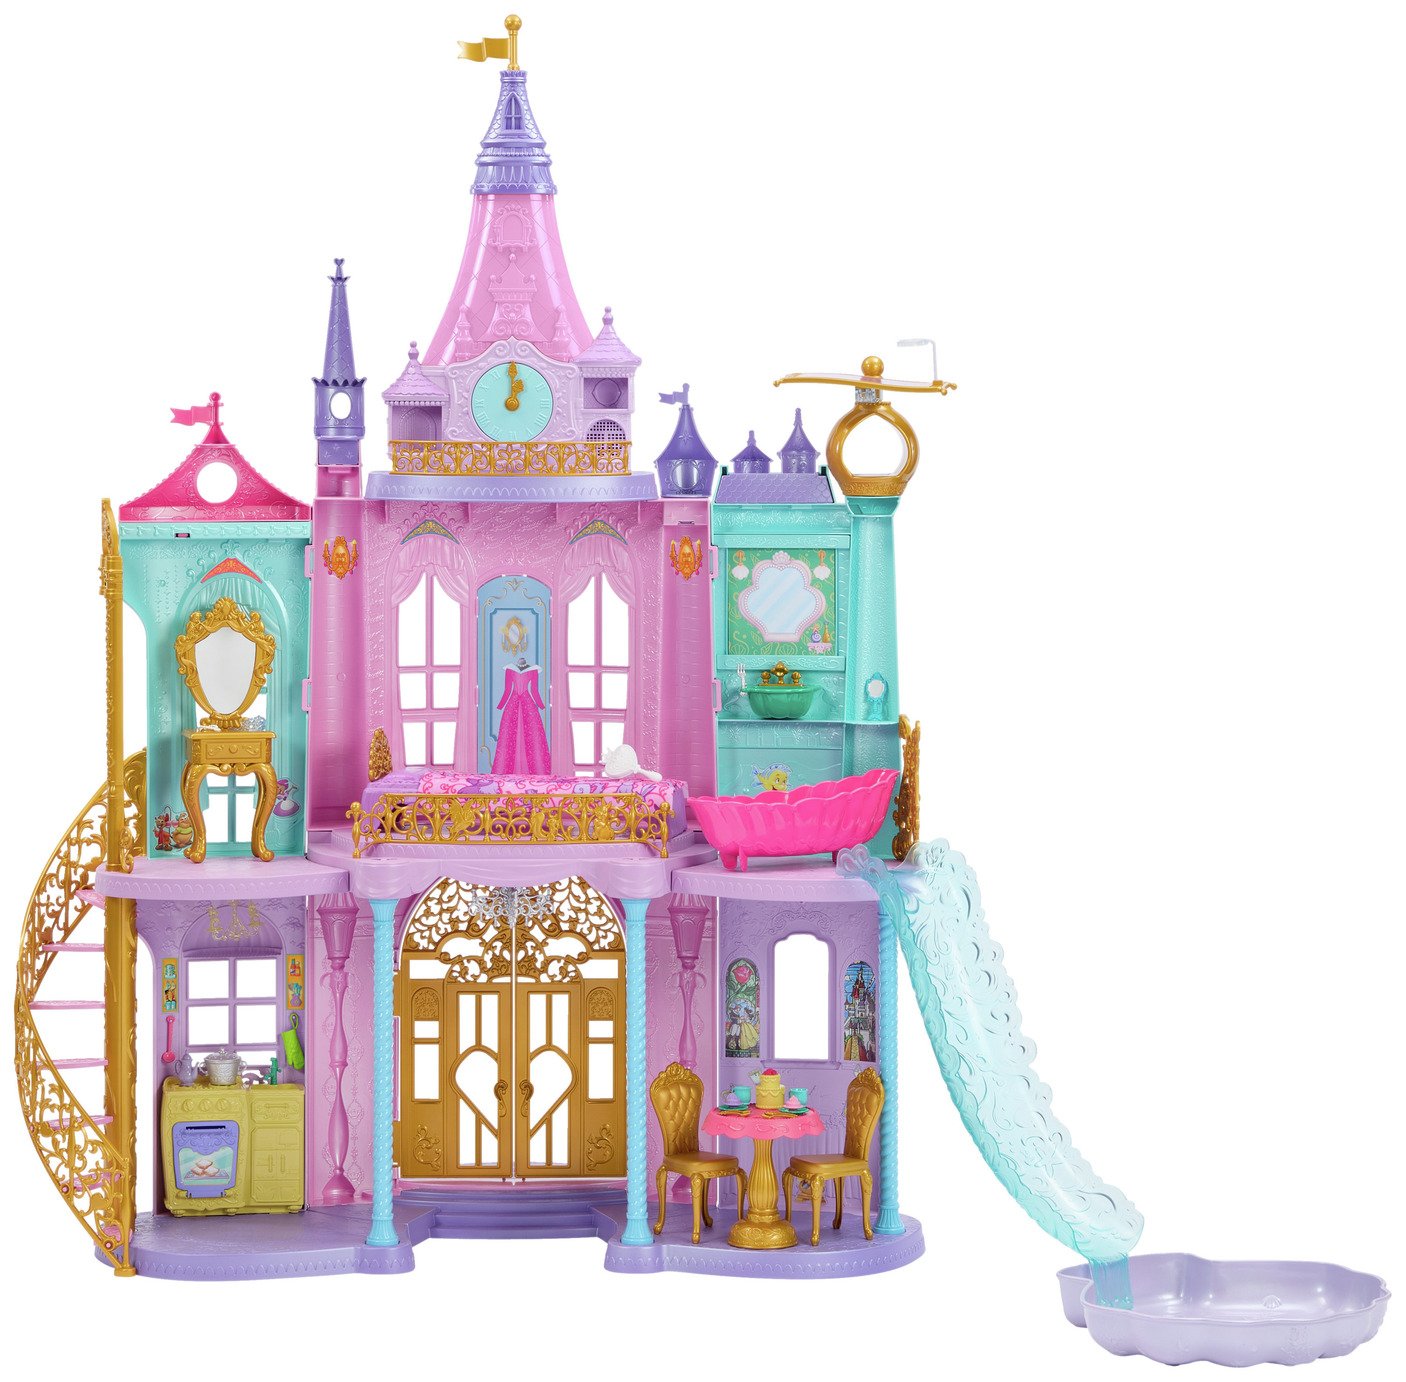 Disney Princess Magic Adventure Light & Sound Castle Playset